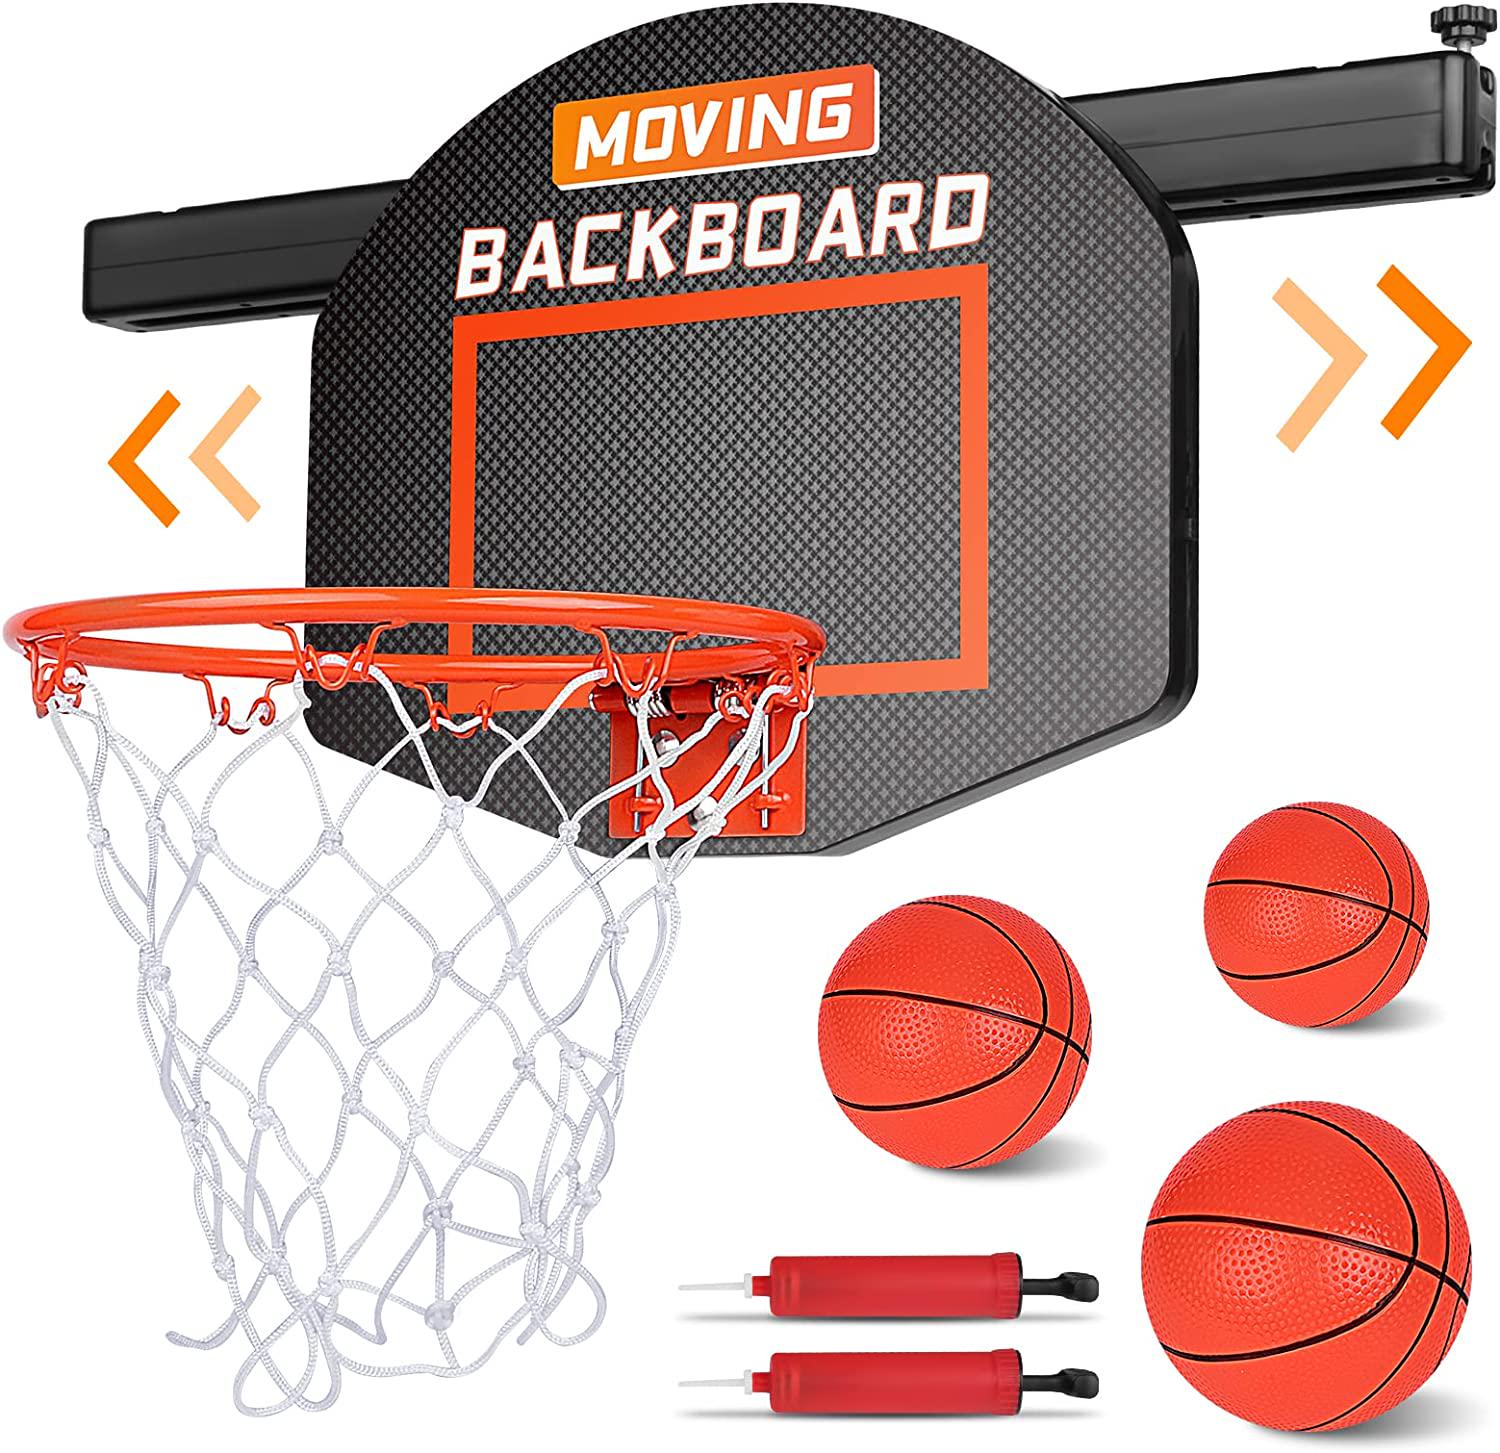 DX DA XIN, DX DA XIN Mini Basketball Hoop for Kids, Moving Backboard Basketball Gift for Boys Indoor Shooting Ball Game Bedroom Door Sport Toys Birthday for 3 4 5 6 7 Old Children